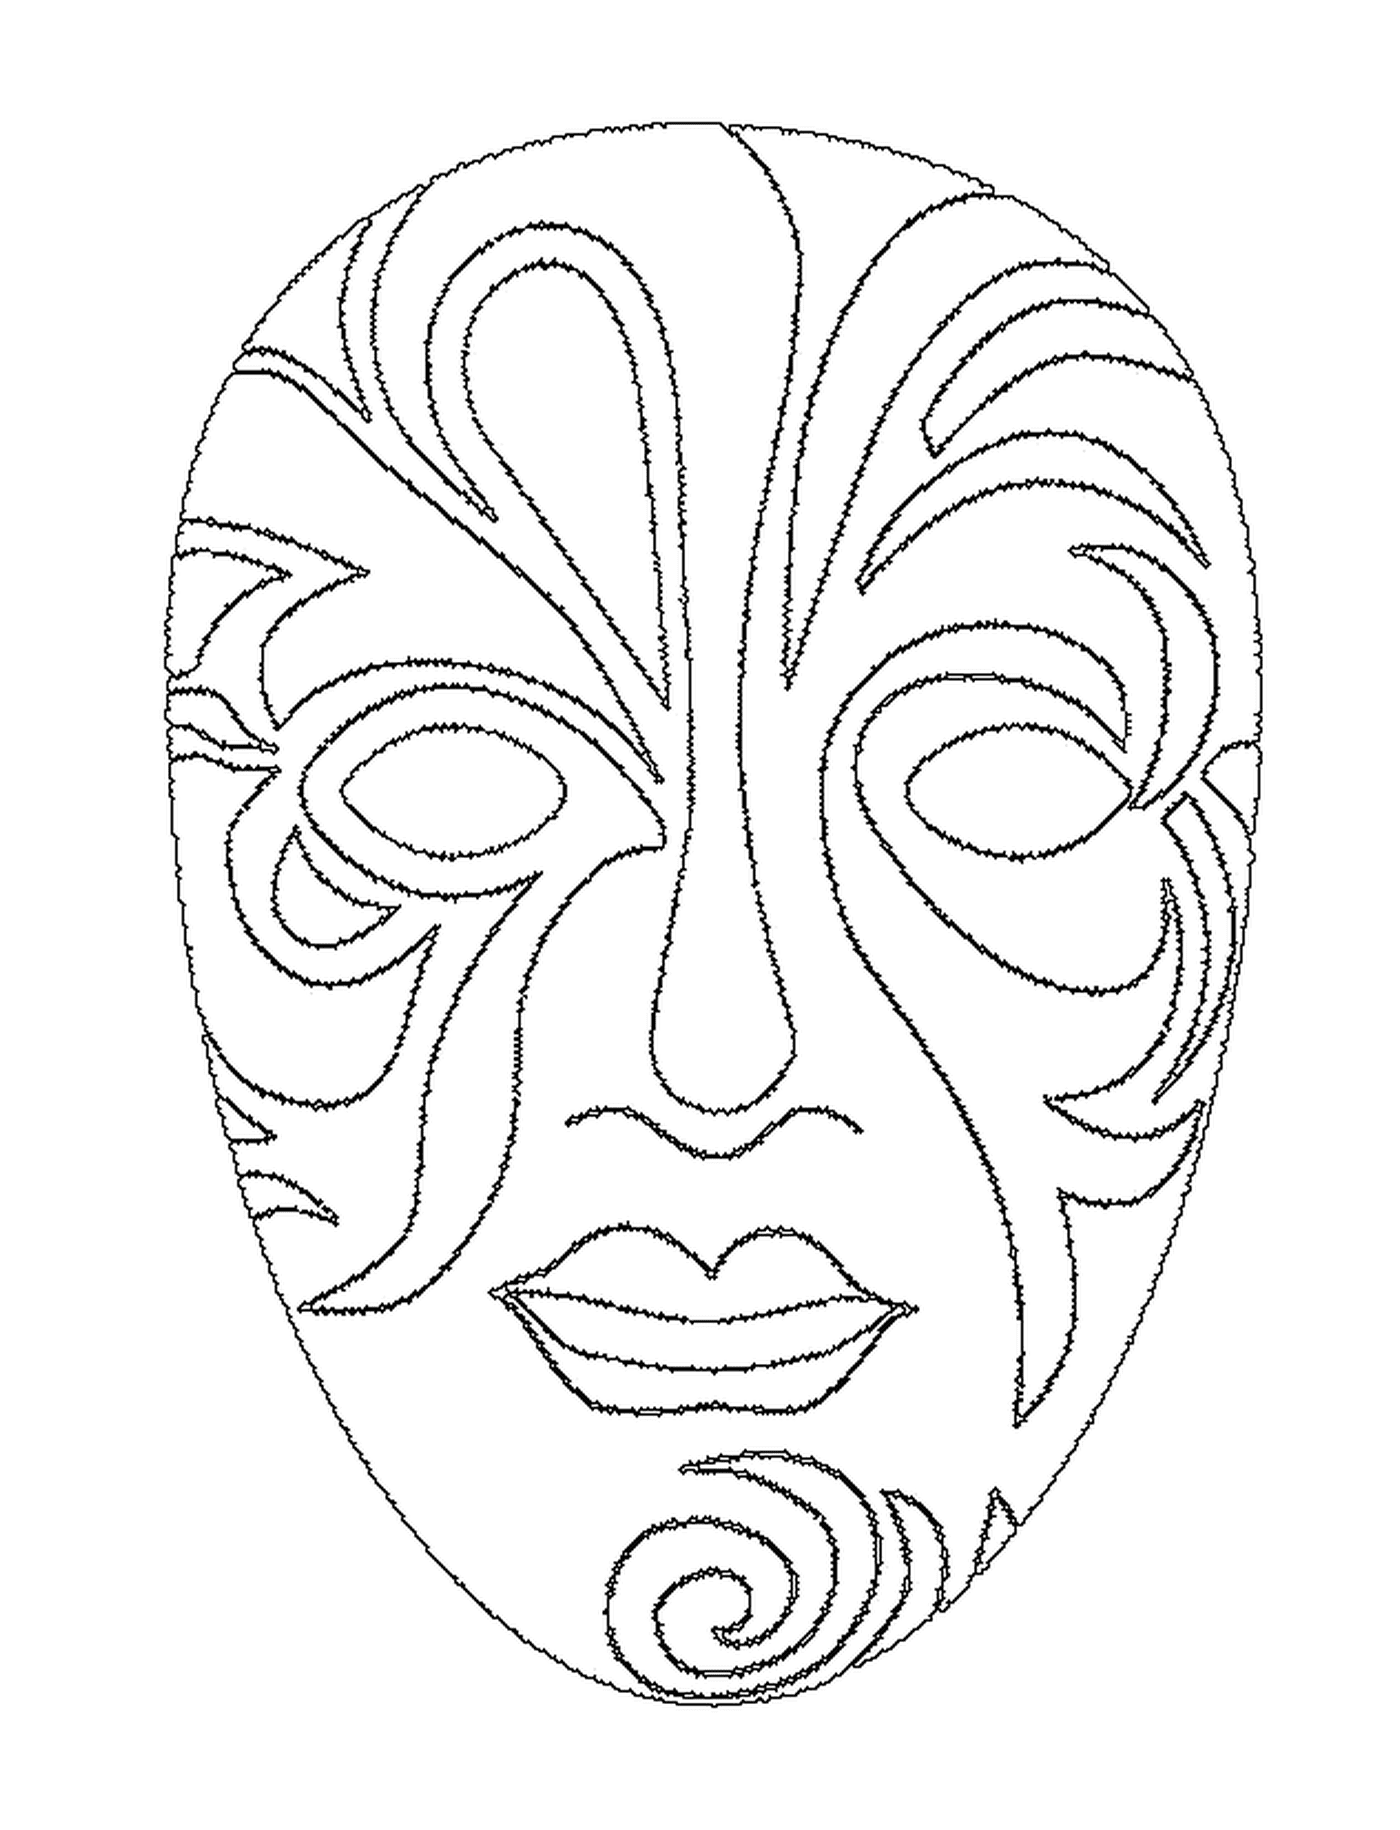  Симпатичная маска для карнавала 